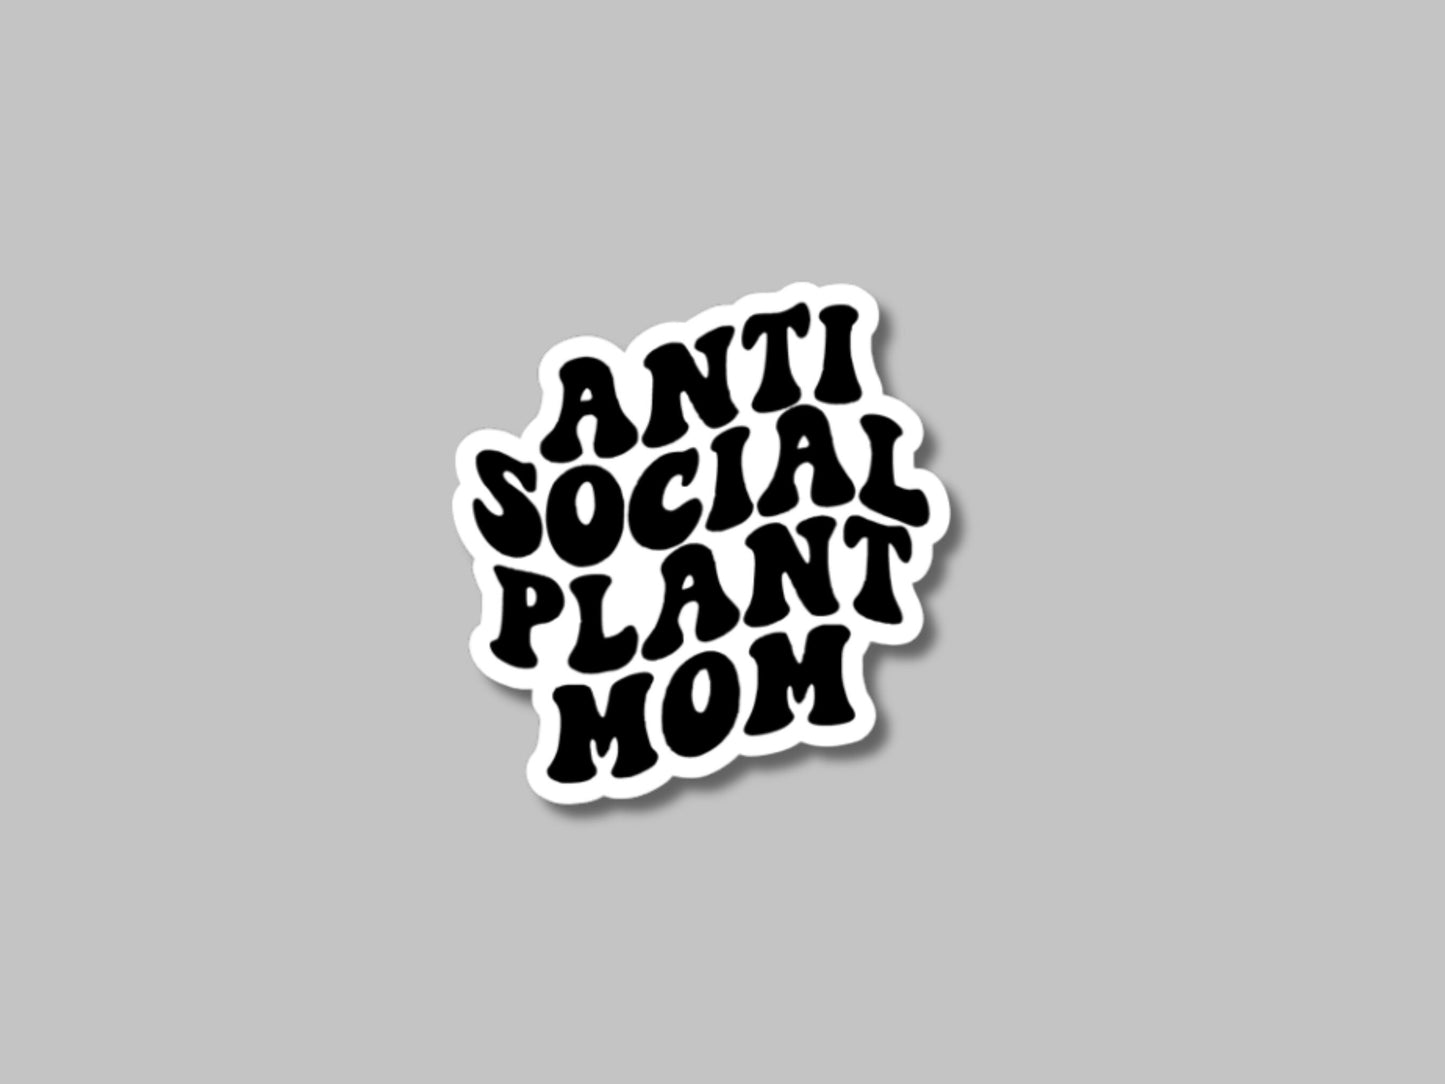 antisocial plant mom, plants sticker, plant gifts, plant stickers, gifts for plant lover, for laptop, for water bottle, antisocial moms club